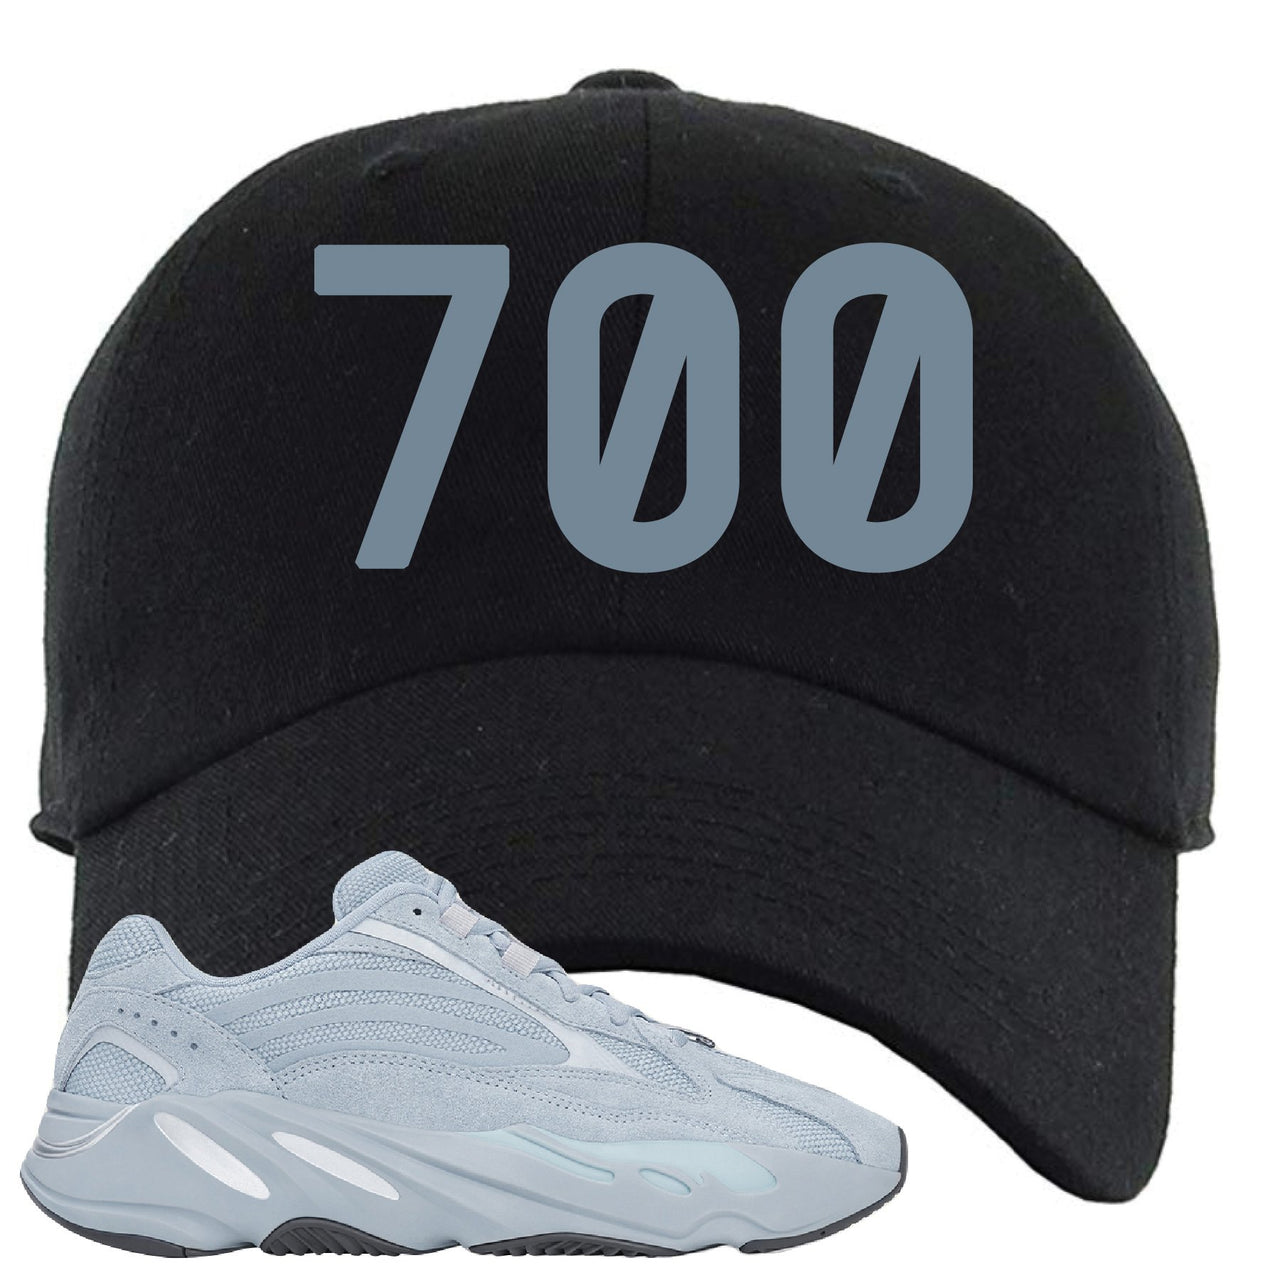 Yeezy Boost 700 V2 Hospital Blue 700 Sneaker Matching Black Dad Hat